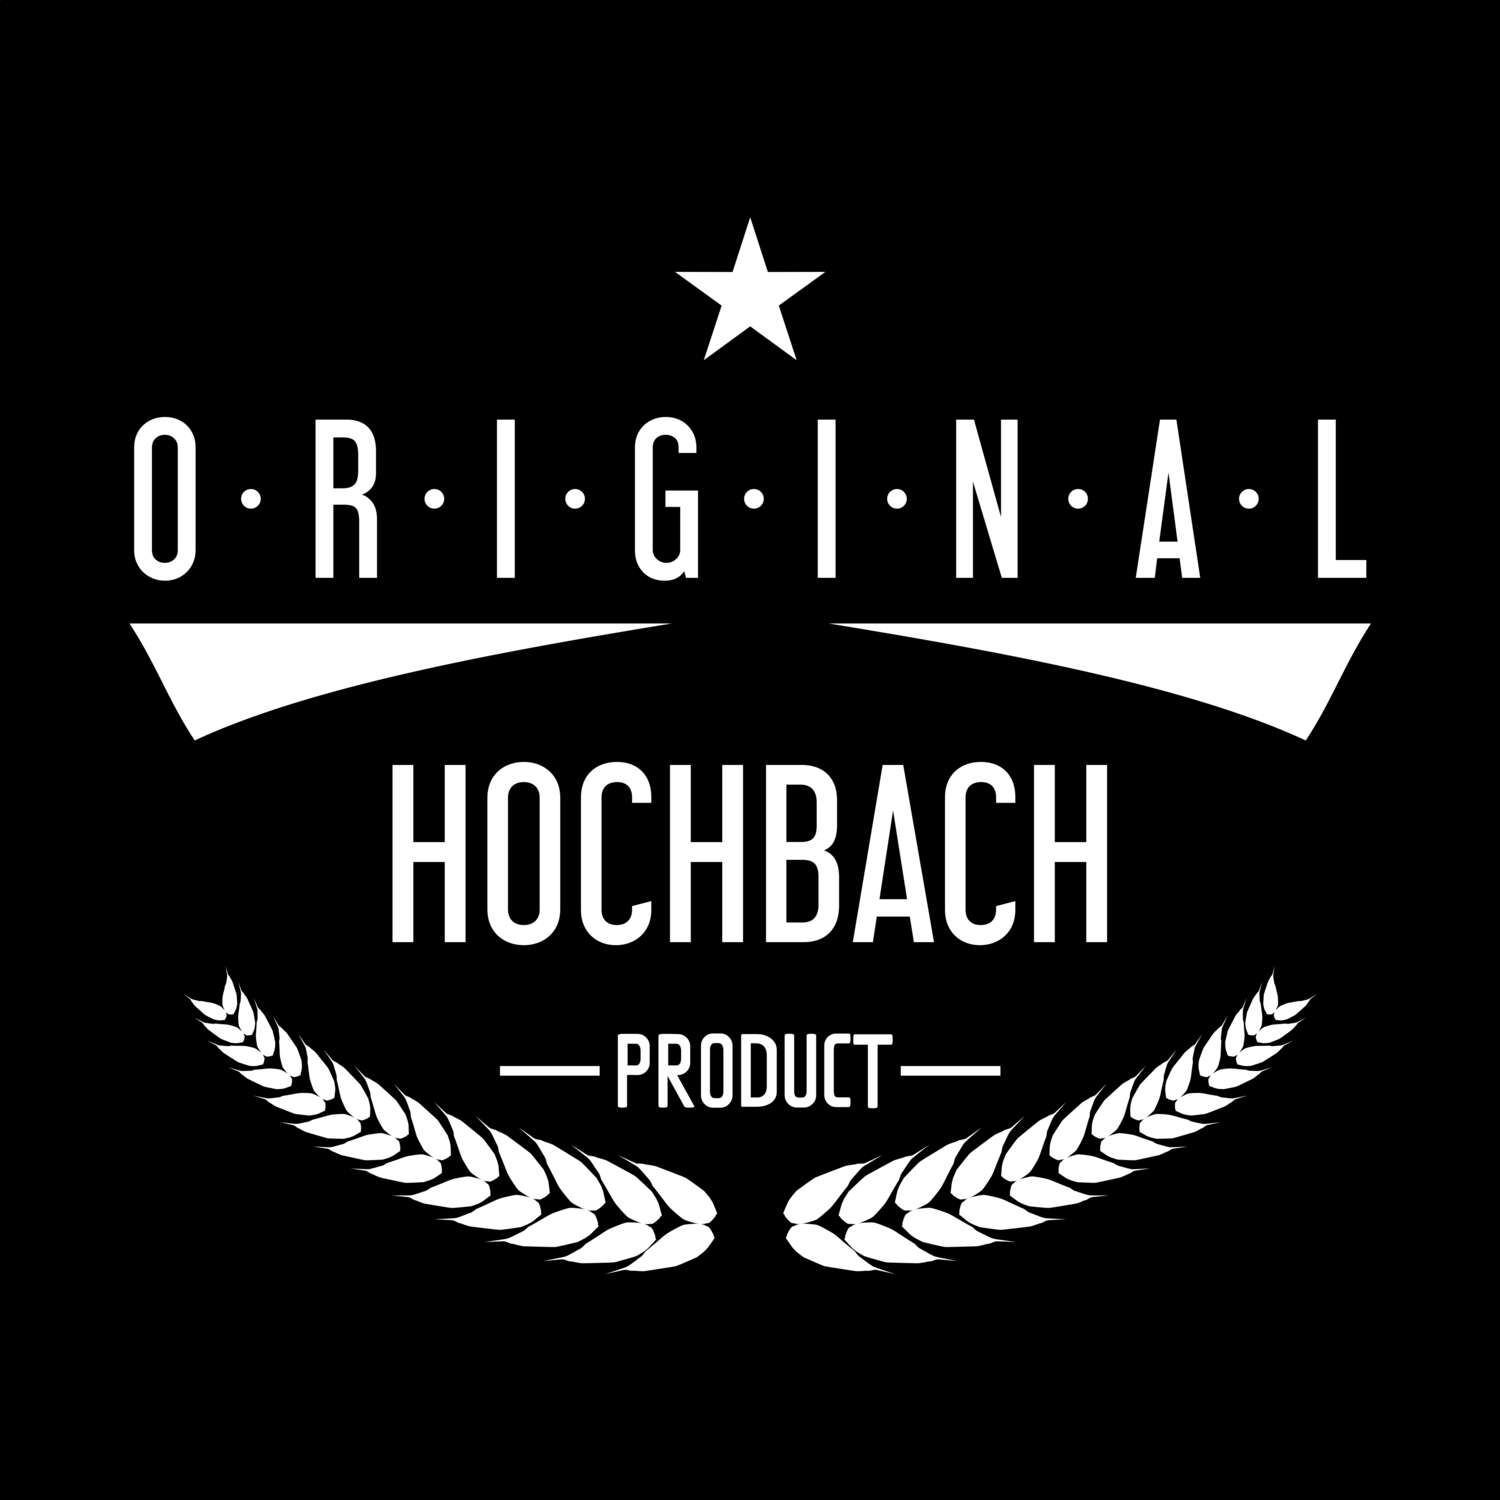 Hochbach T-Shirt »Original Product«